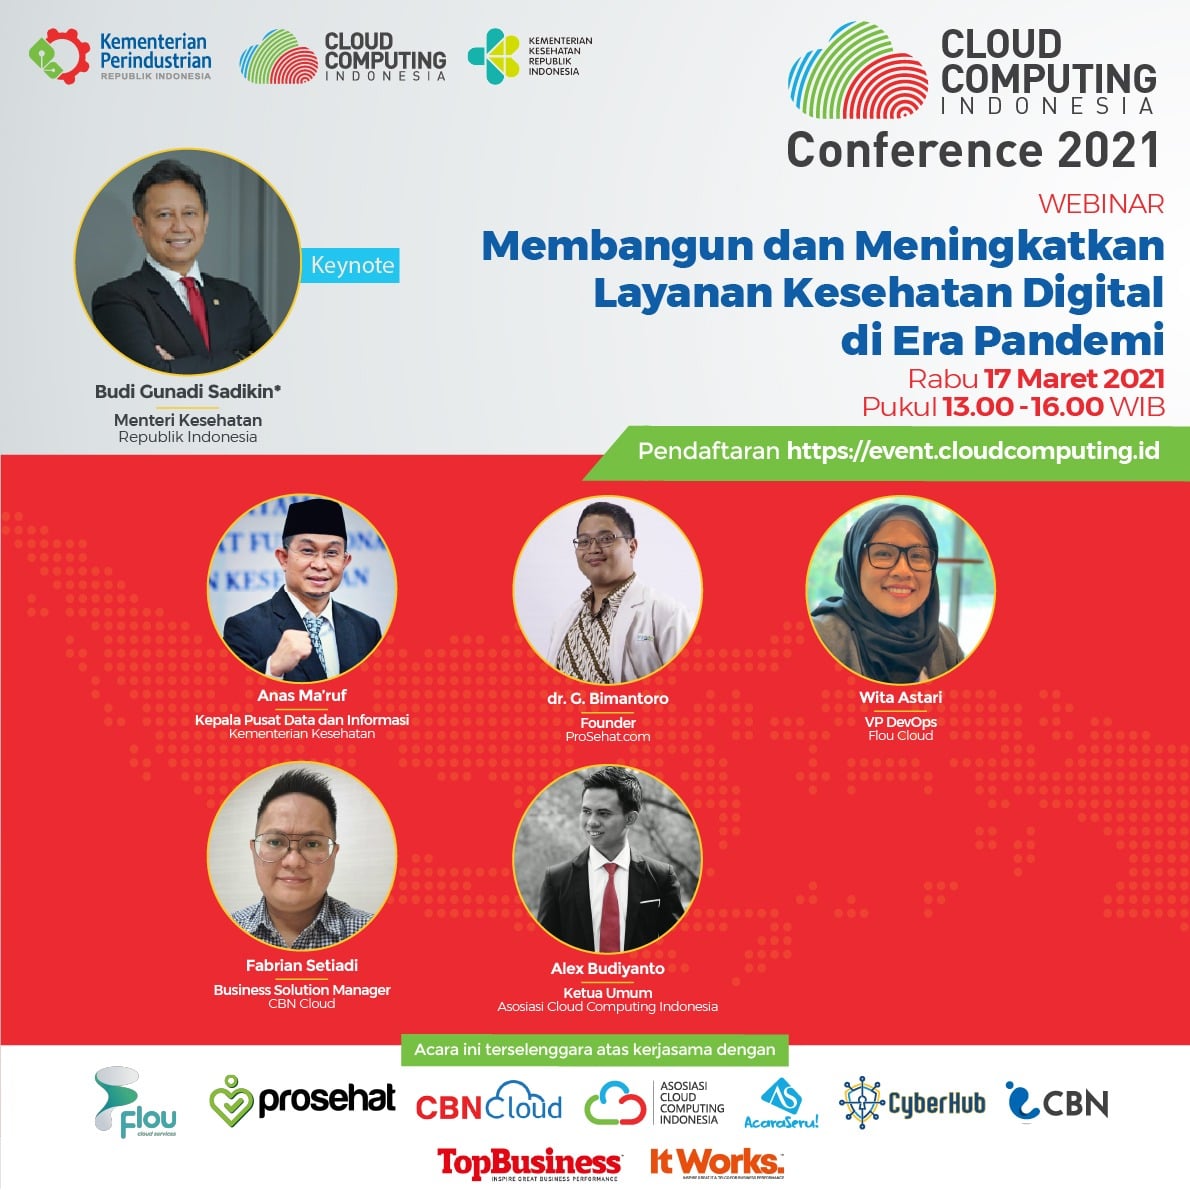 Cloud Computing Indonesia team image